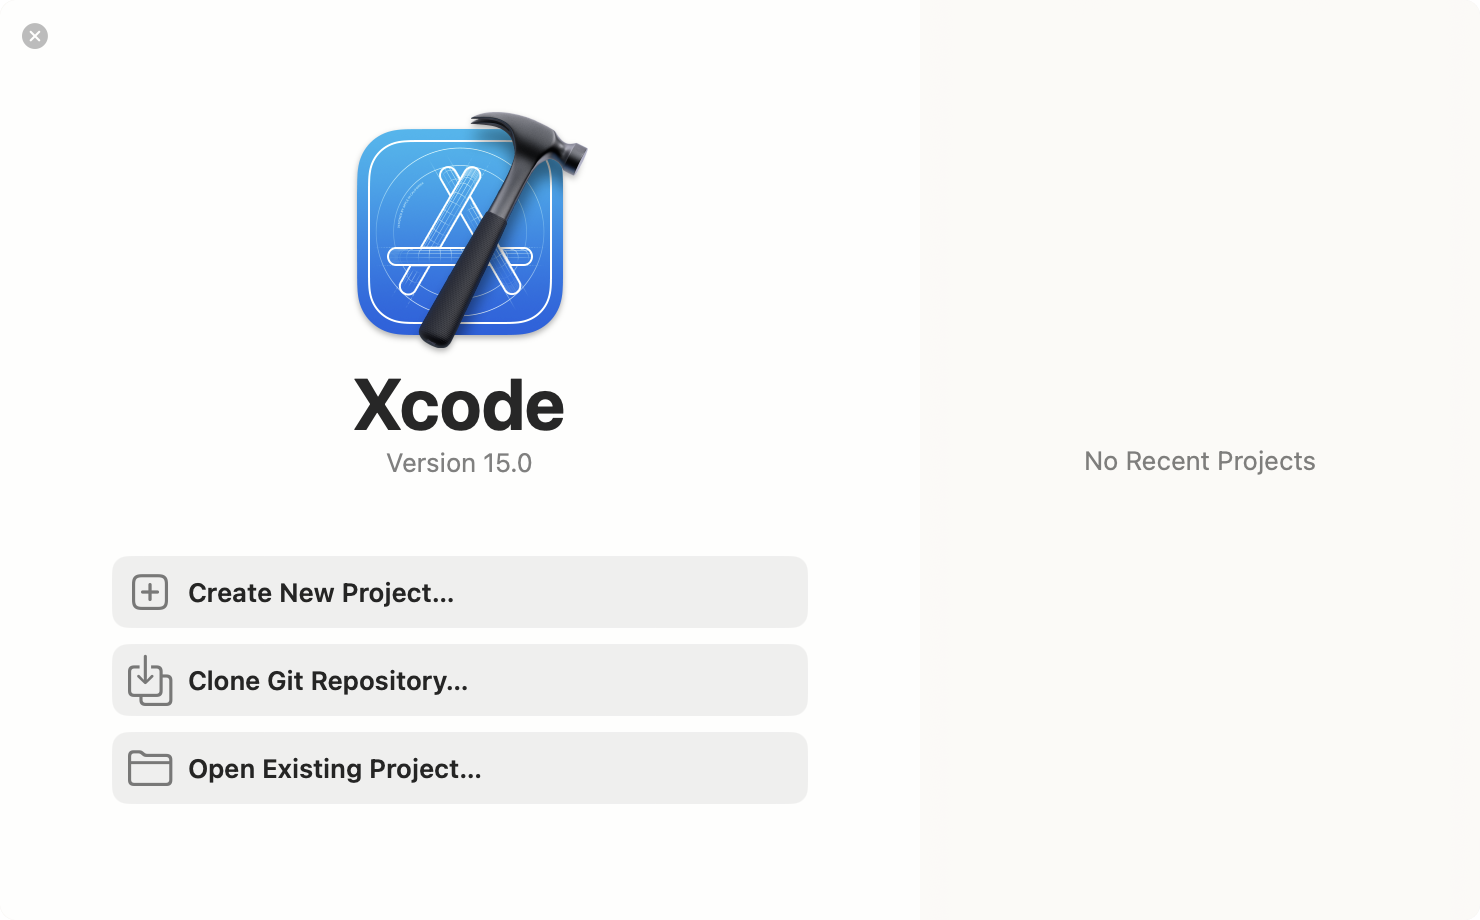 Xcode version